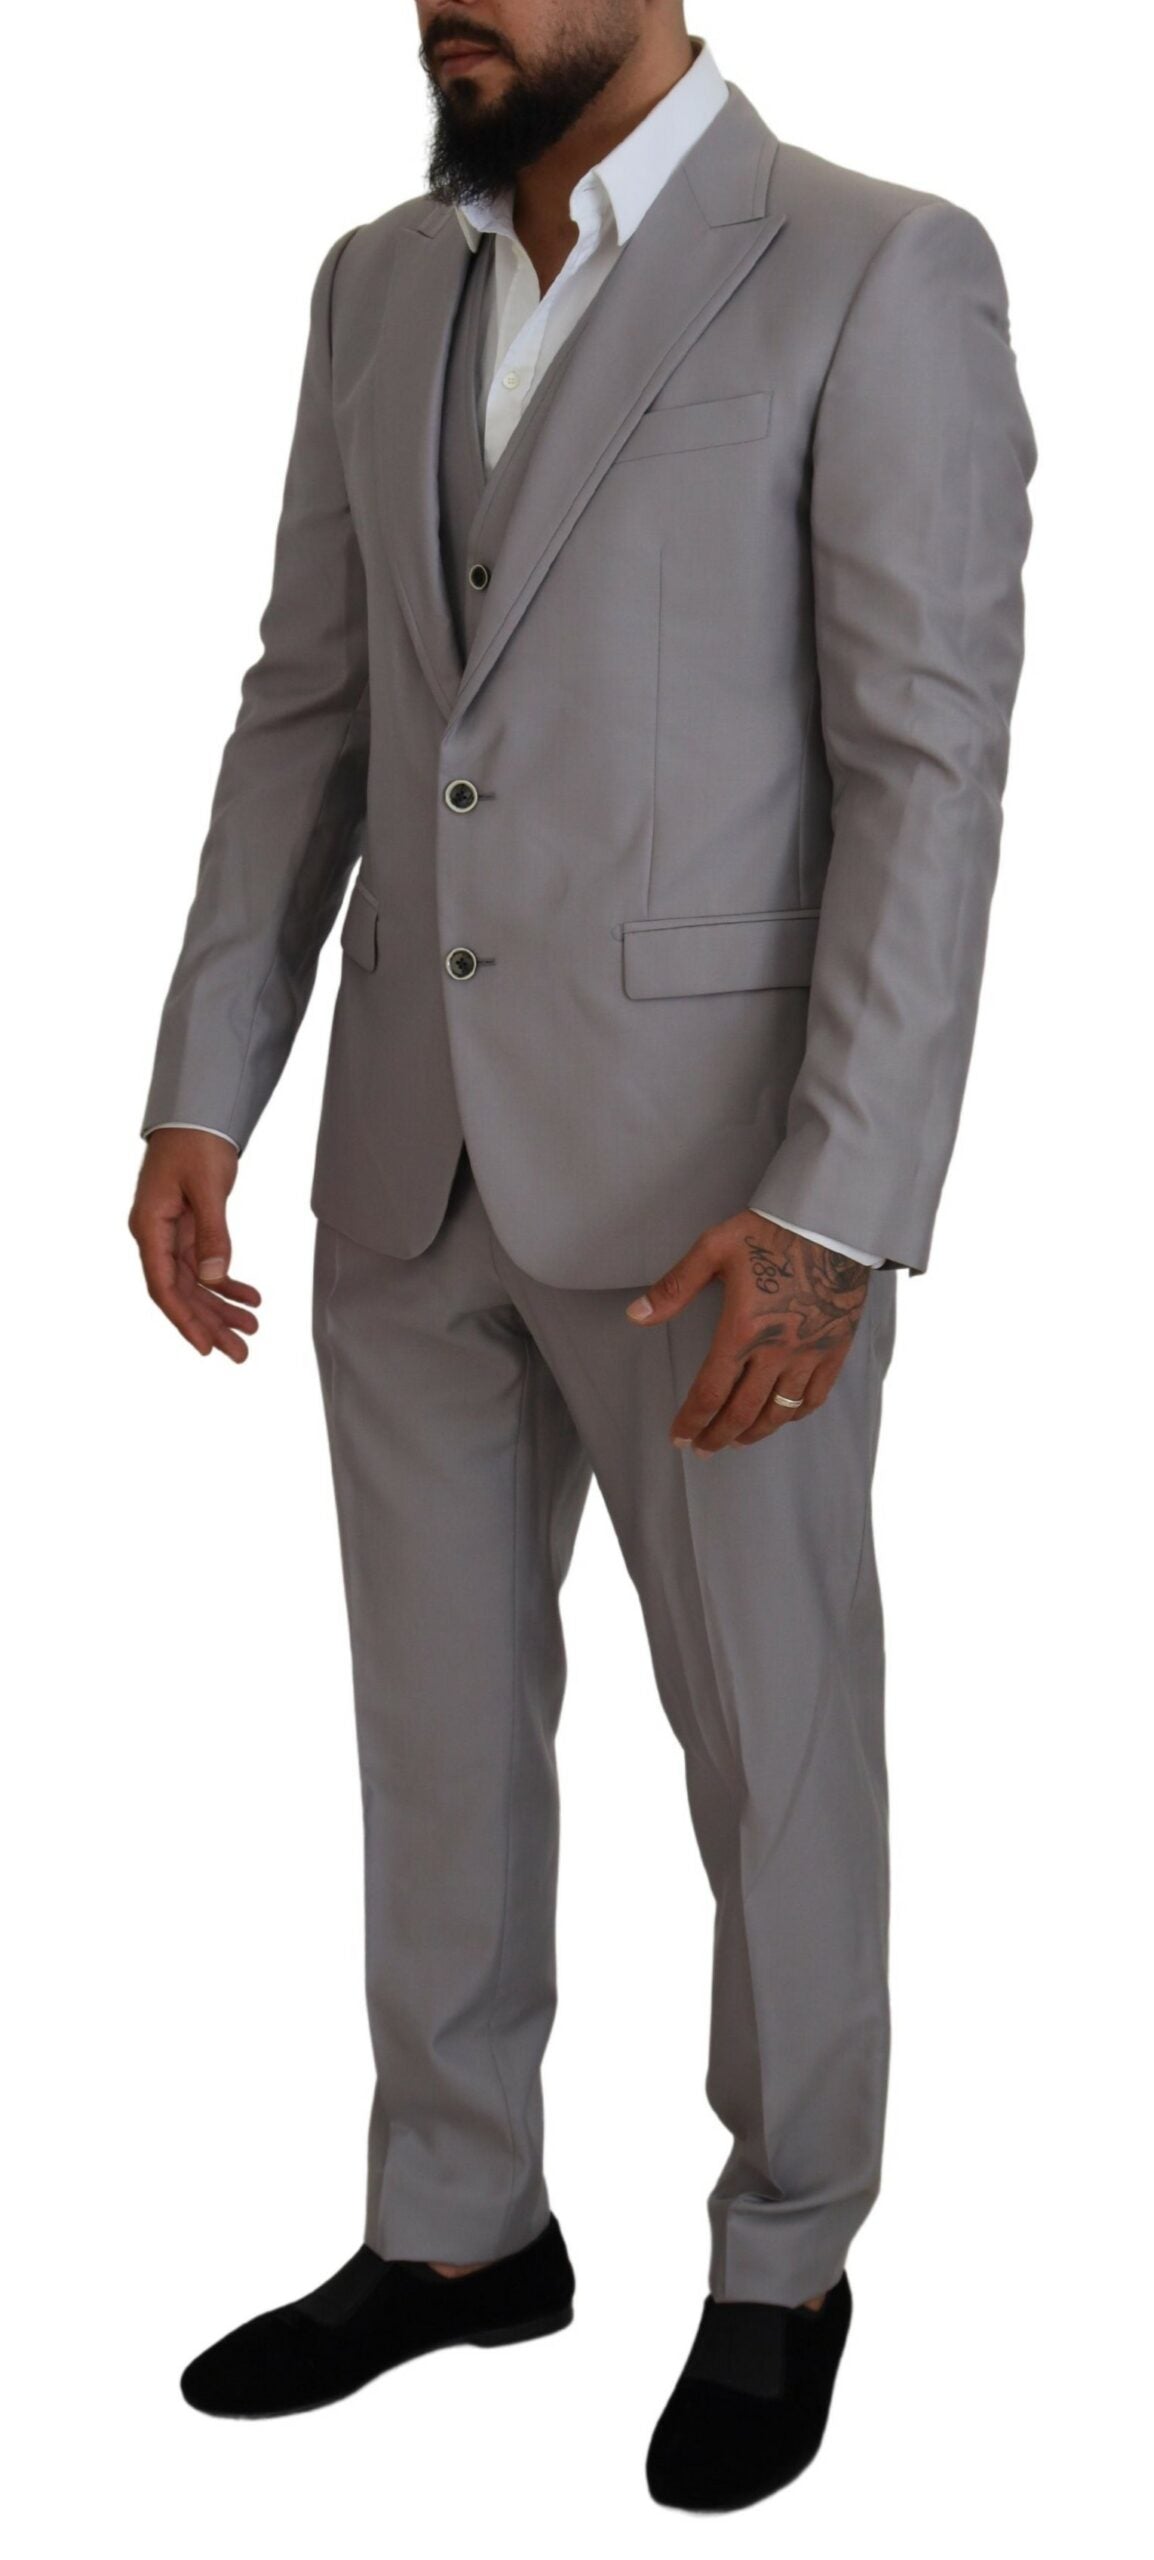 Elegant Silver Slim Fit Three-Piece Suit